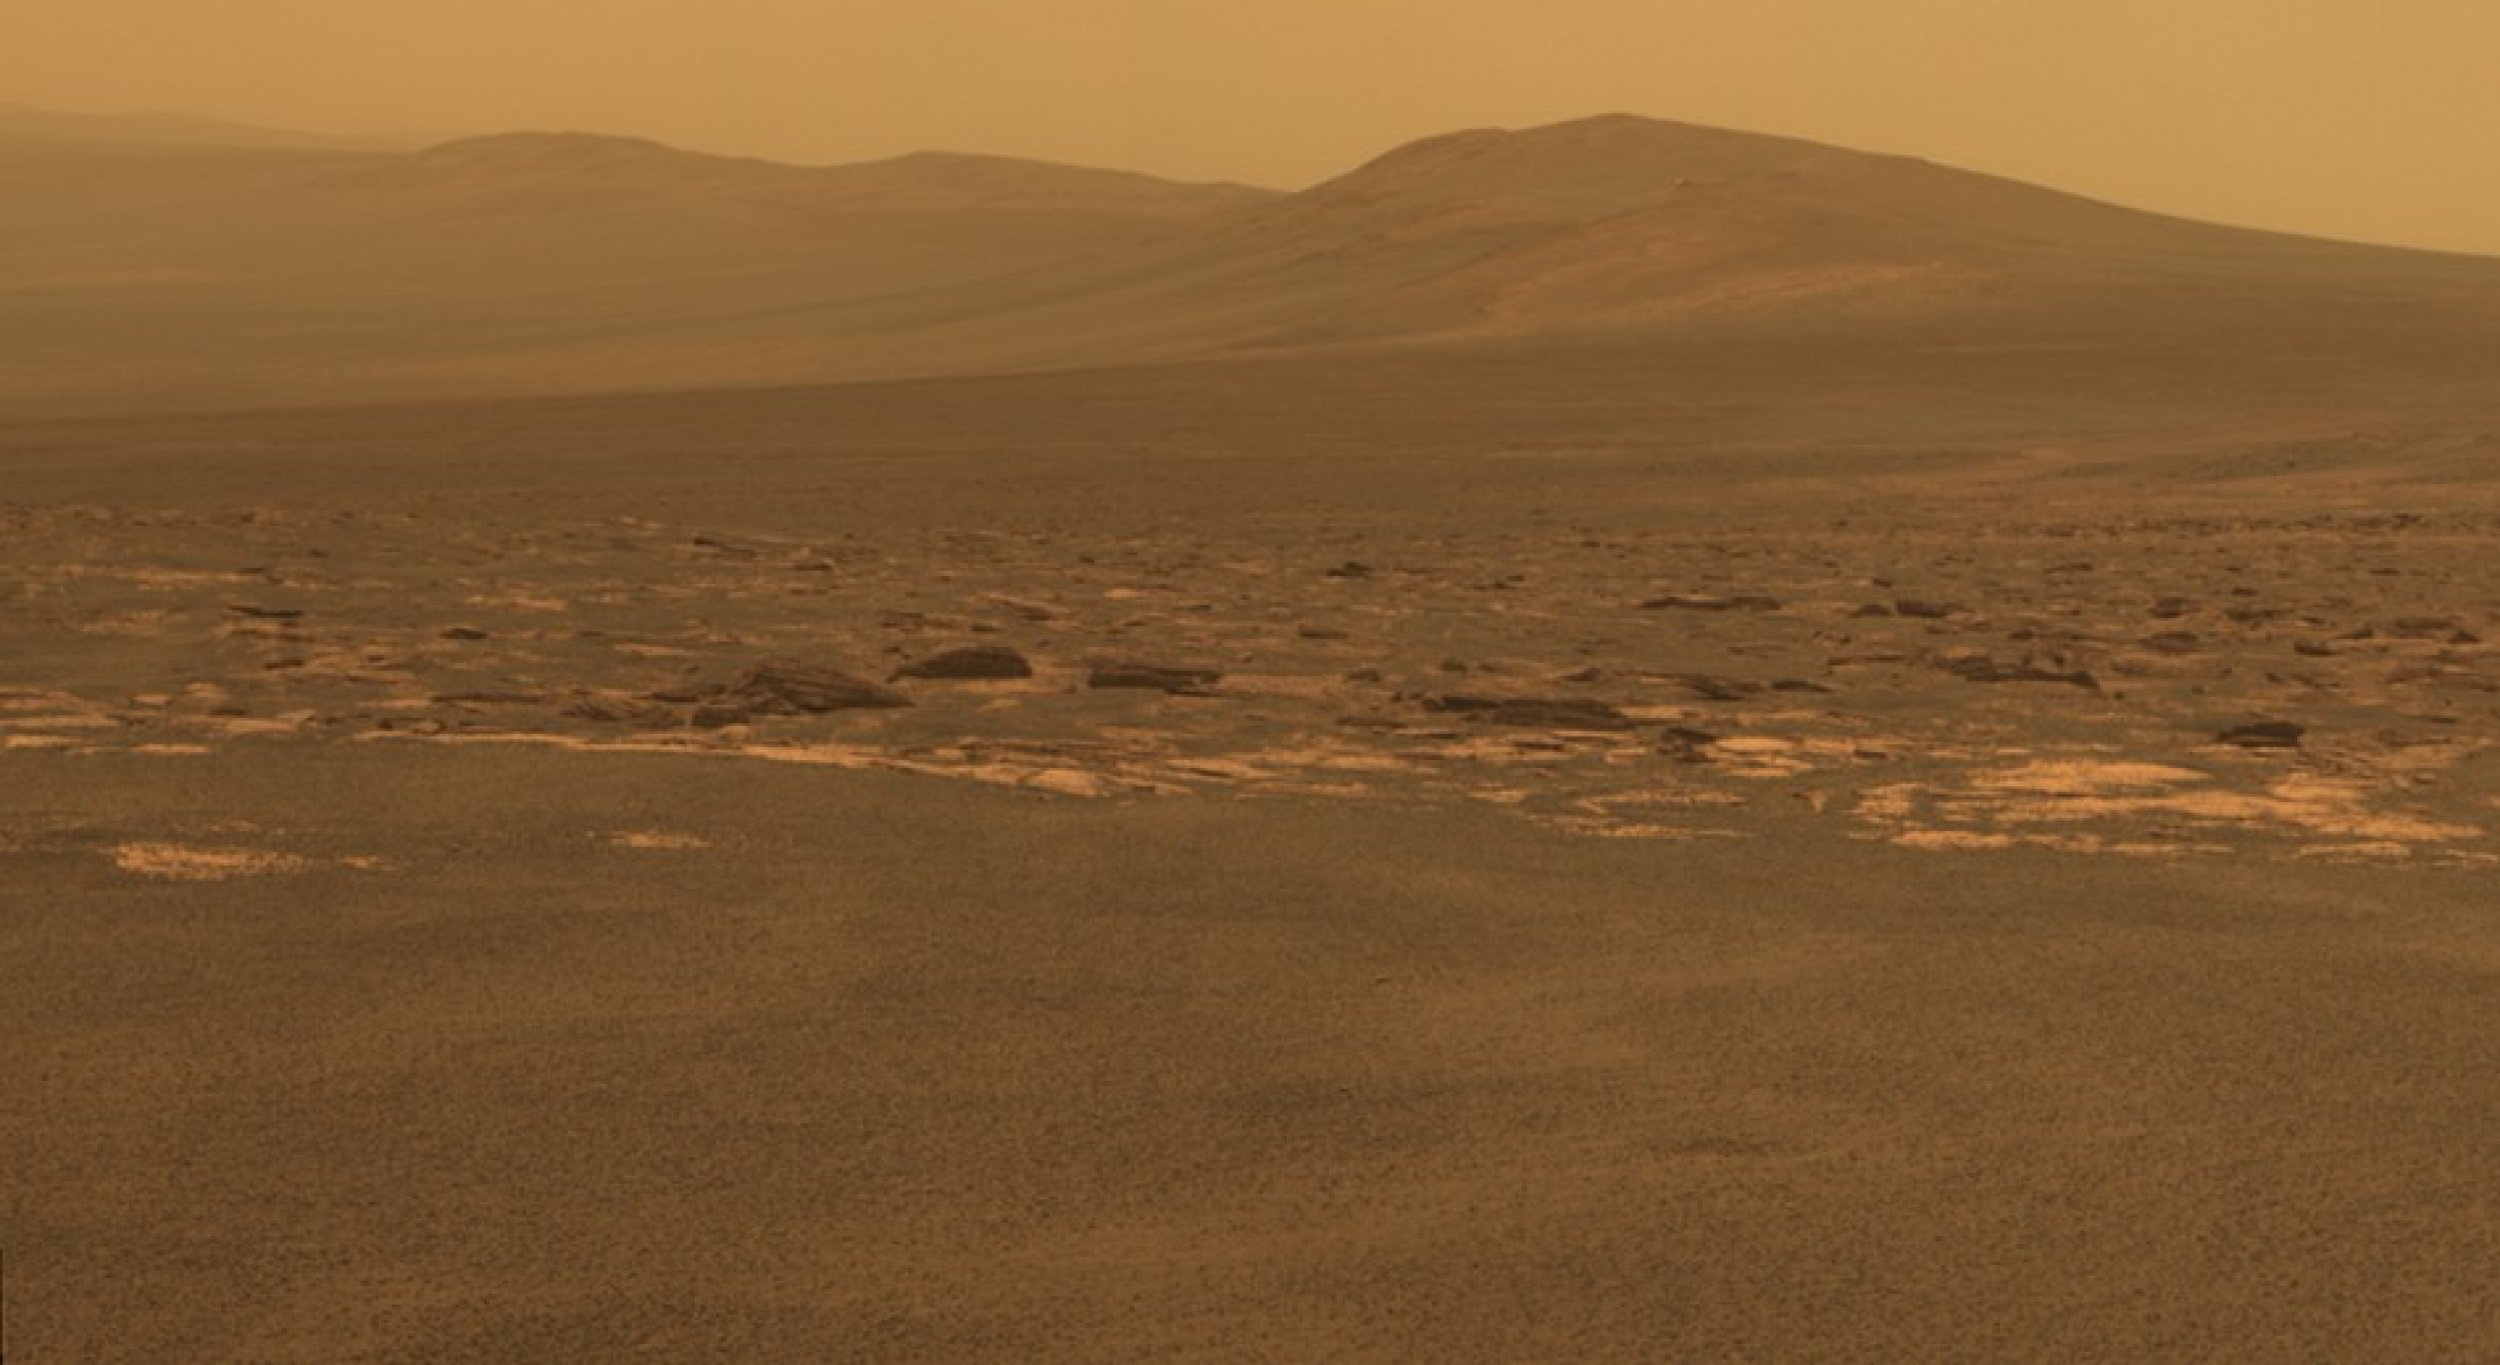 West Rim of Endeavour Crater on Mars  West Rim of Endeavour Crater on Mars